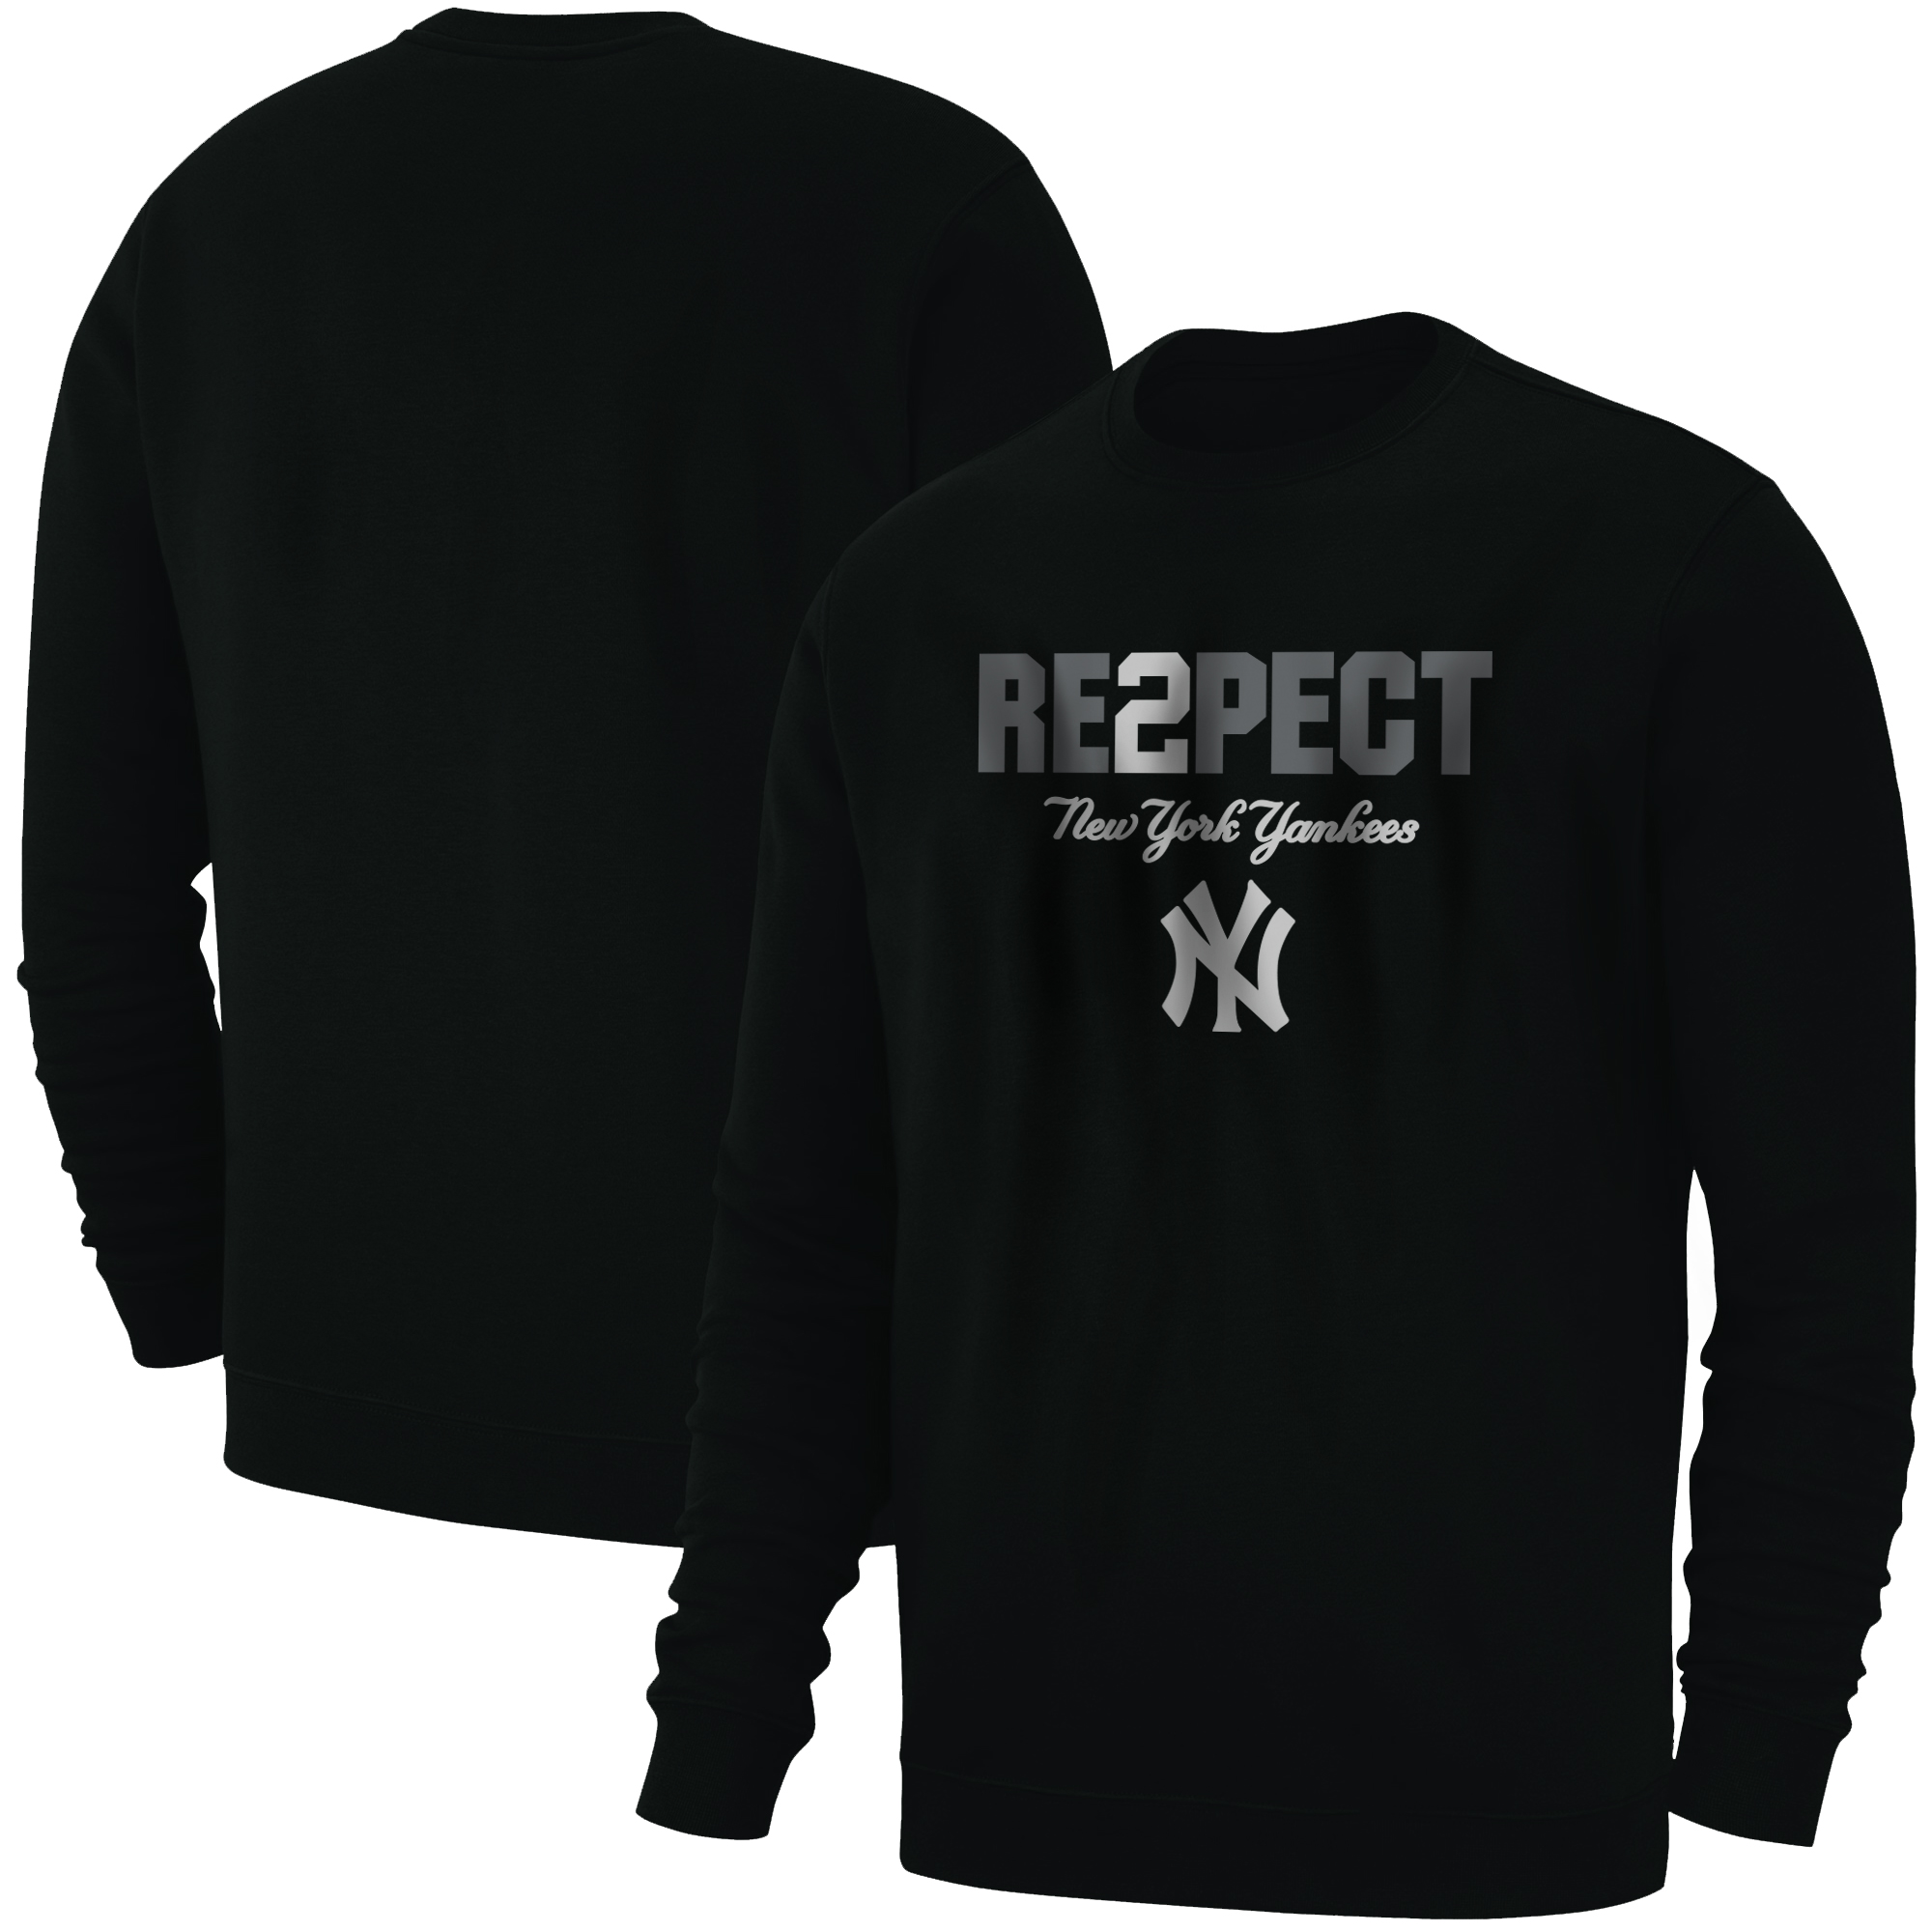 New York Yankees Re2pect Basic (BSC-BLC-817-Re2pect)